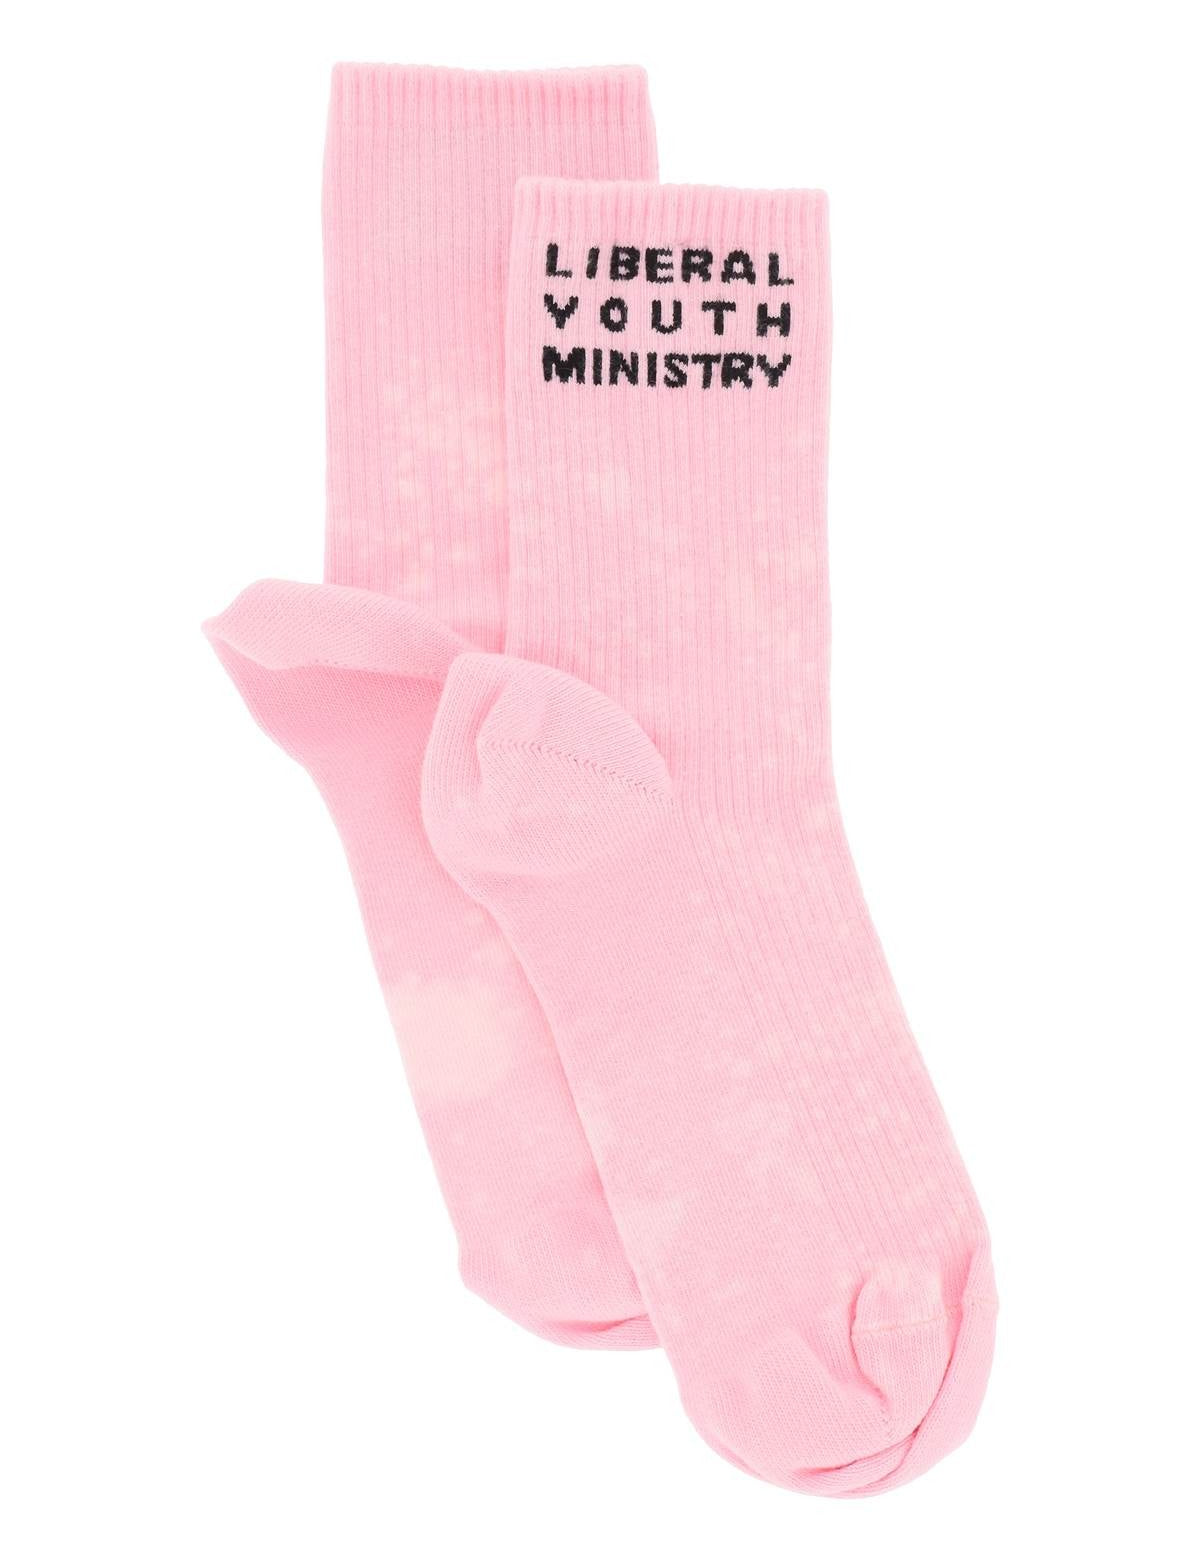 liberal-youth-ministry-logo-sport-socks.jpg